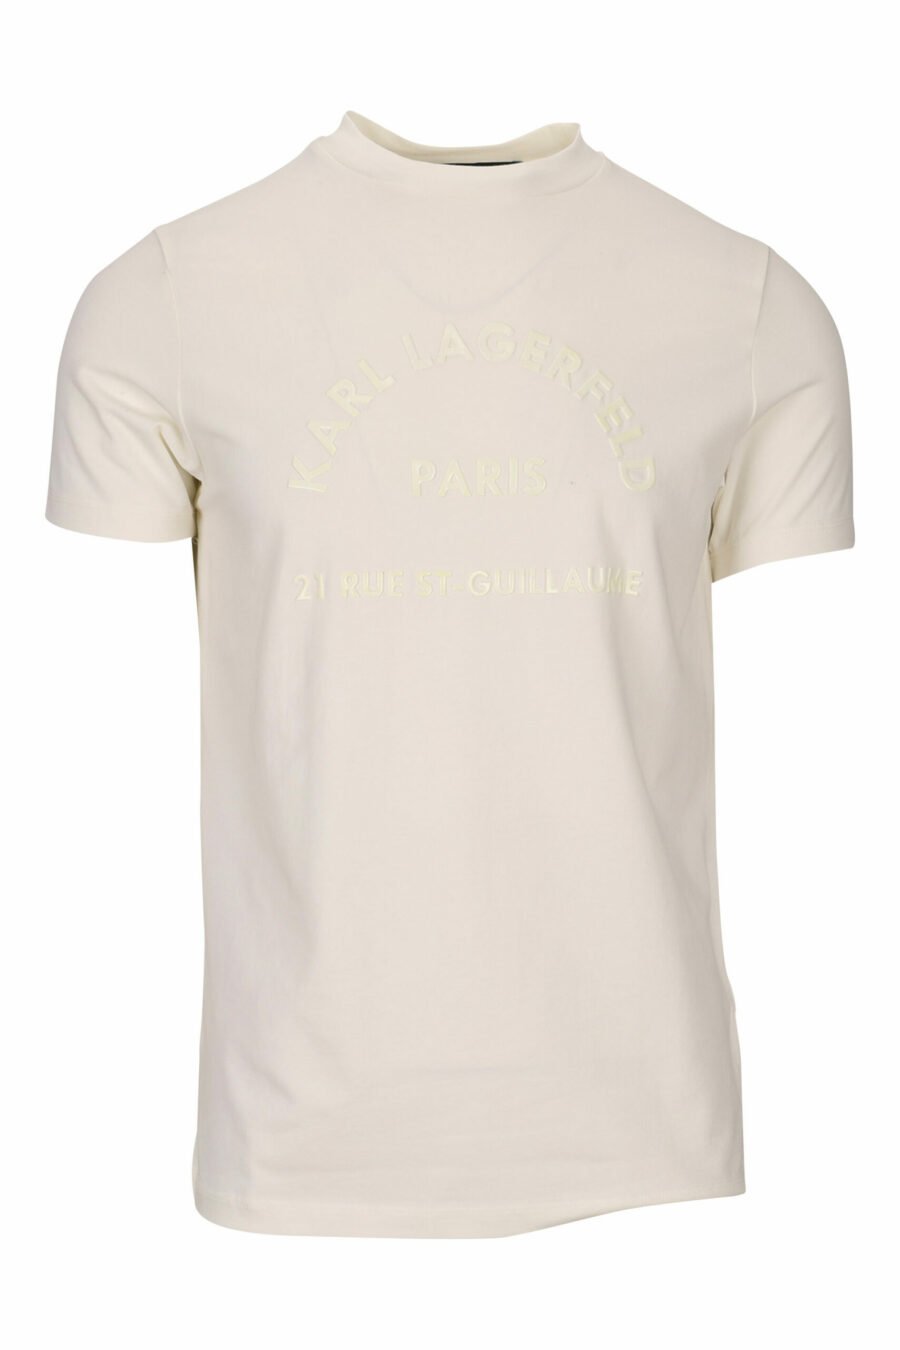 Weißes T-Shirt mit monochromem Maxilogo "rue st guillaume" - 4062226678124 skaliert